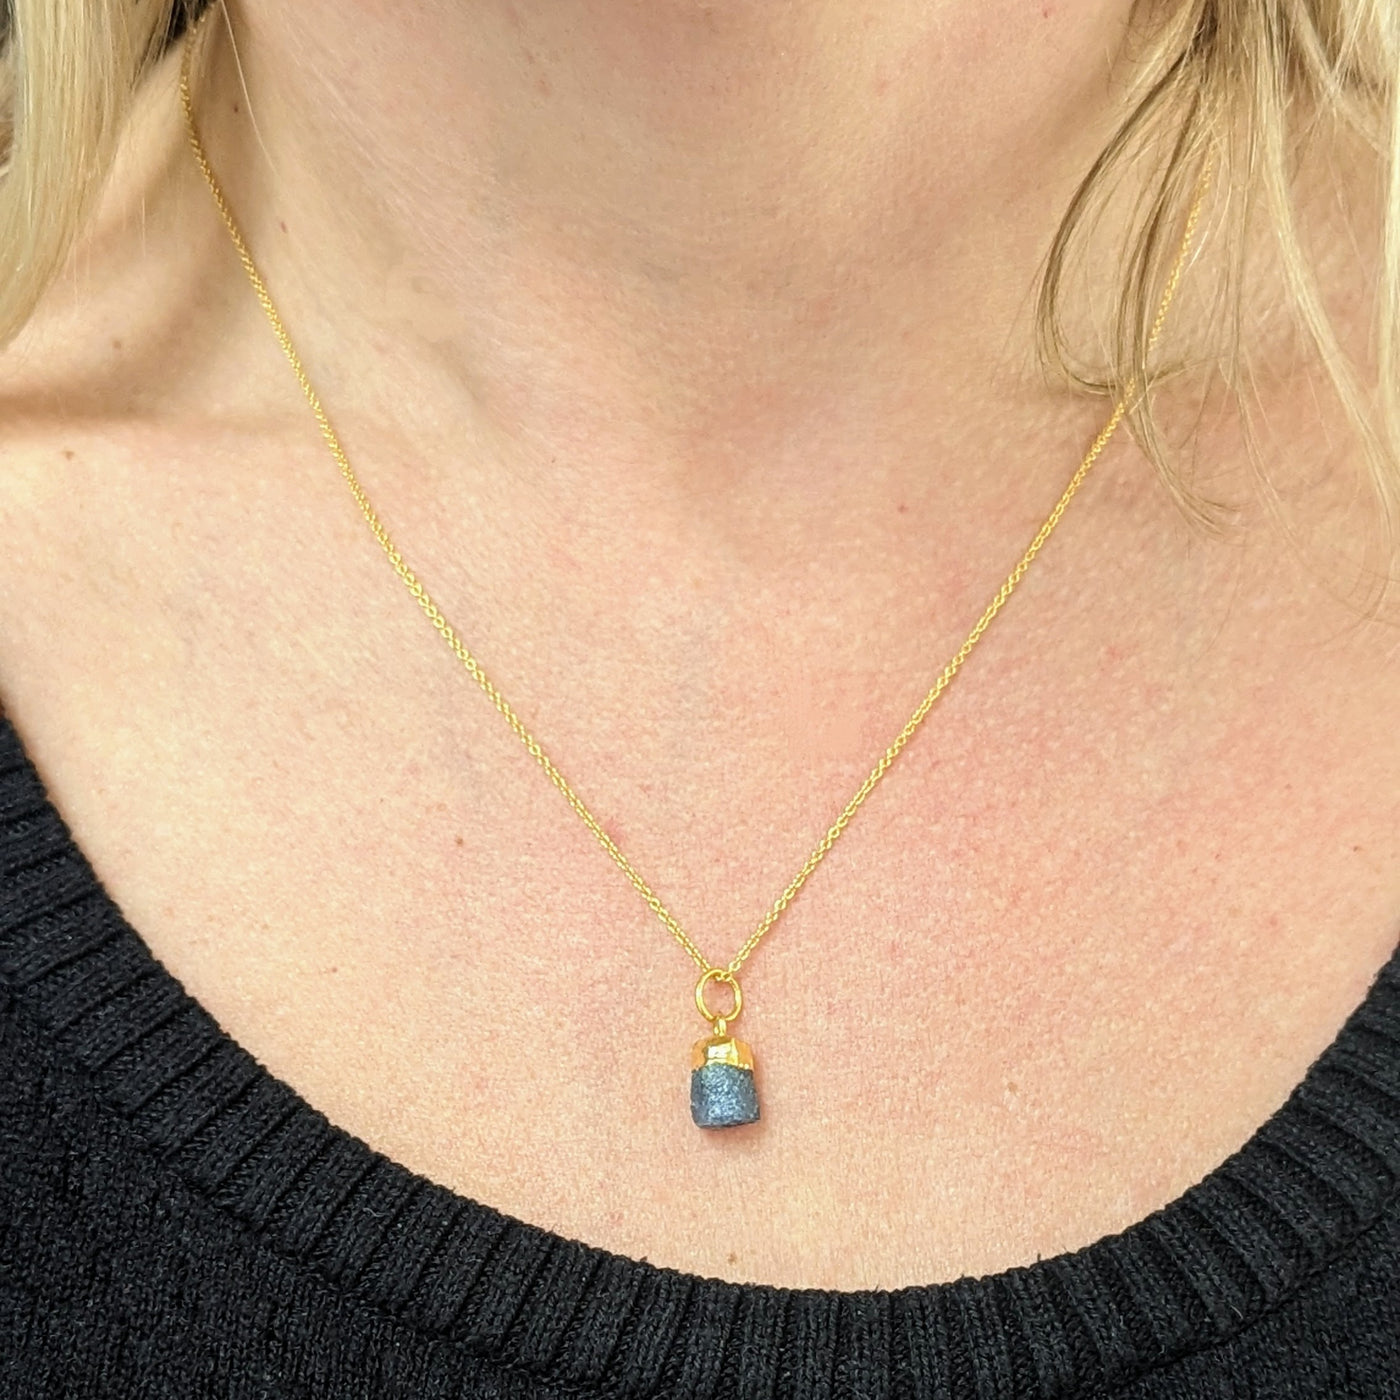 Sapphire September birthstone necklace